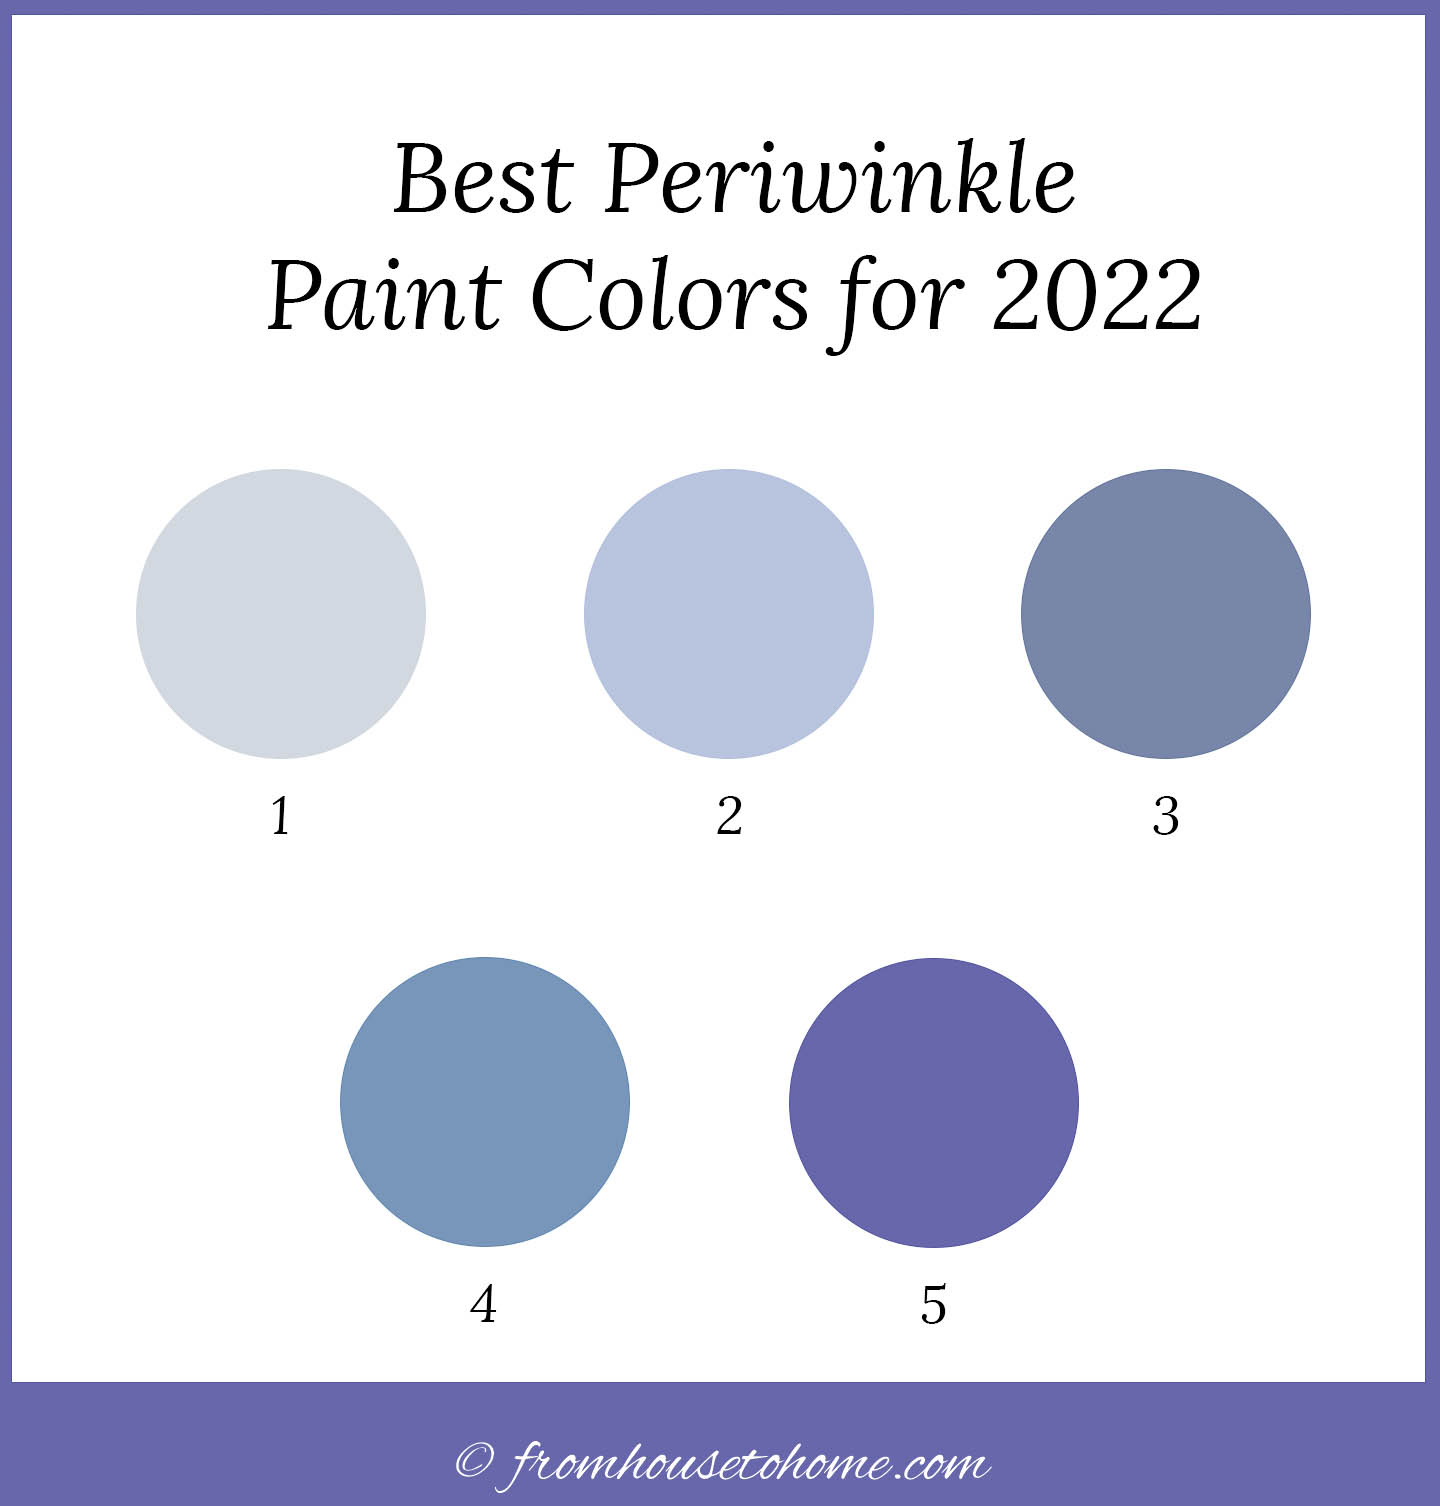 Periwinkle paint colors trending in 2022